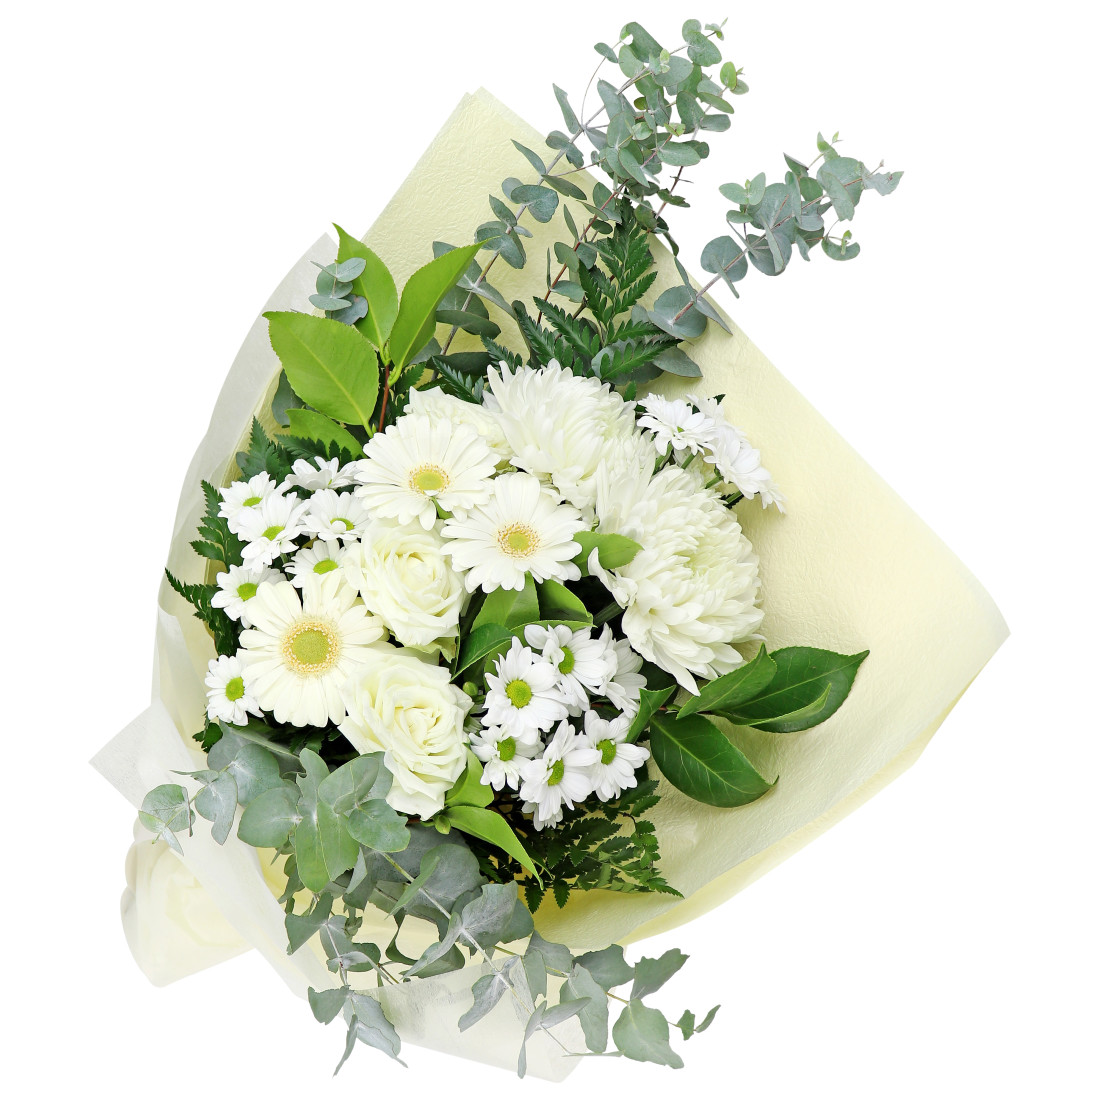 A bouquet of sympathy flowers to send a heartfelt message